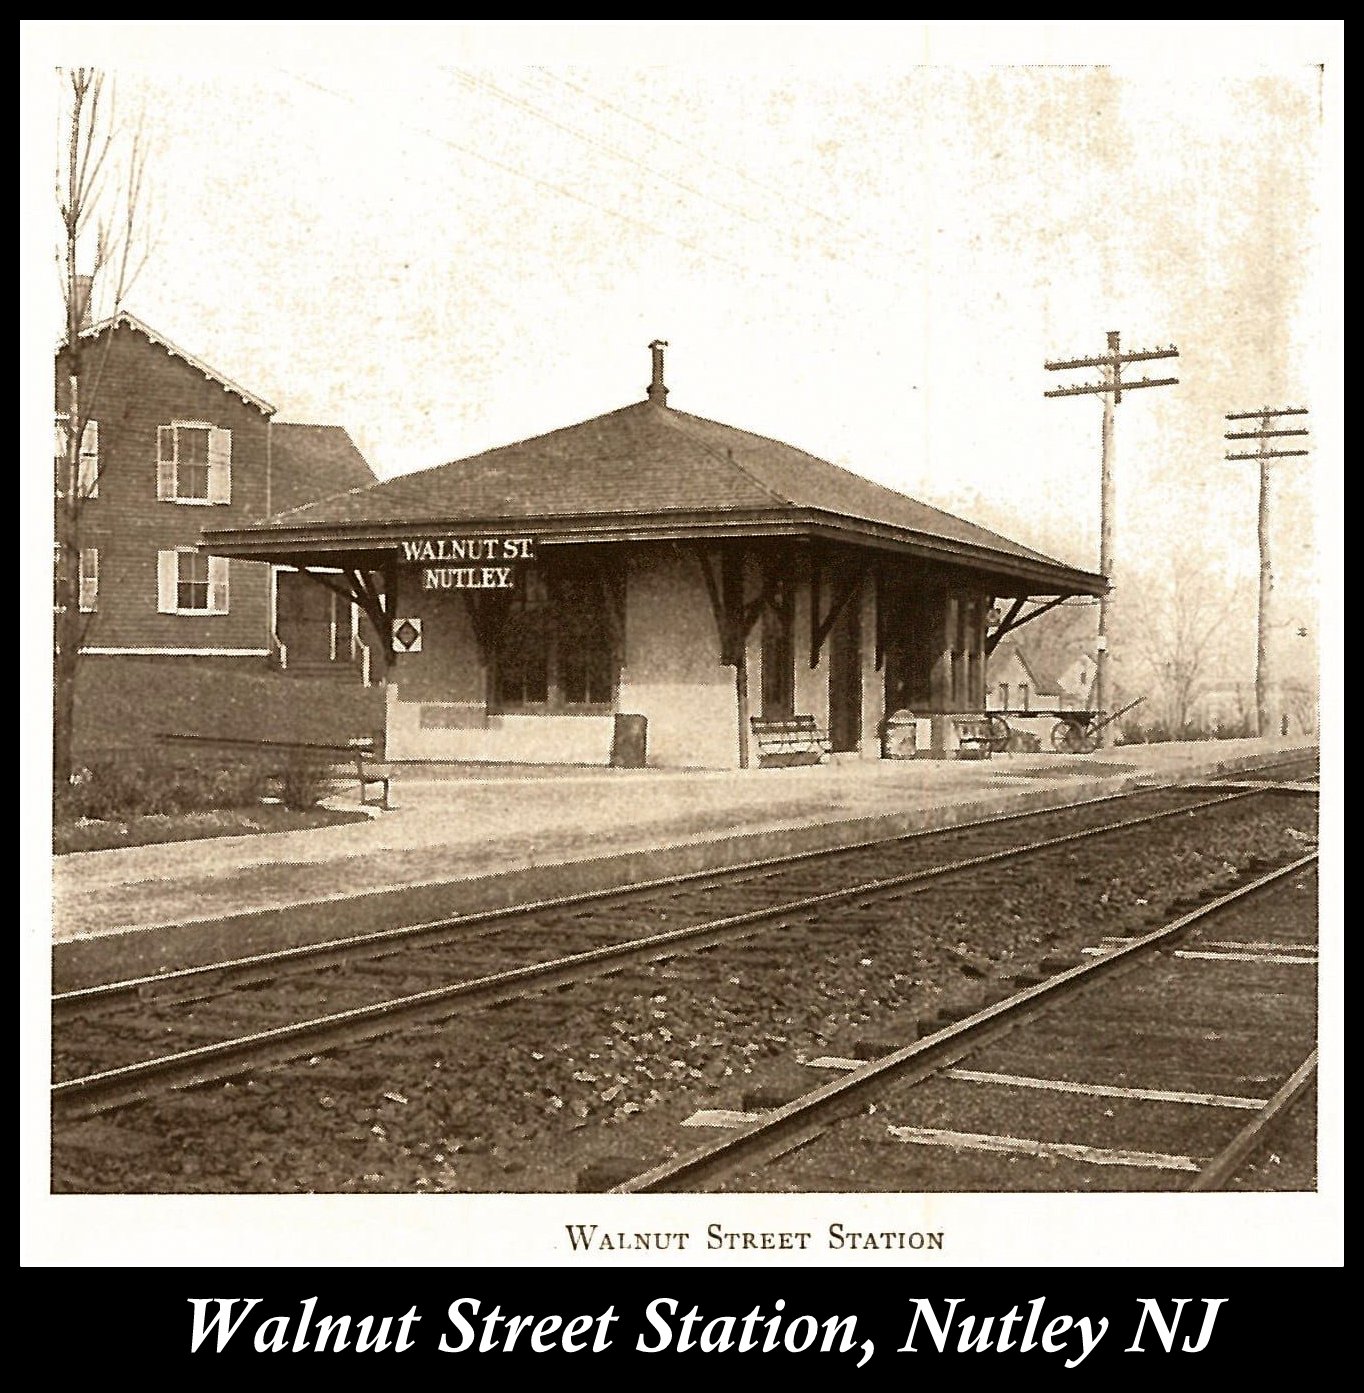 Wallnut Street railroad station, Nutley NJ